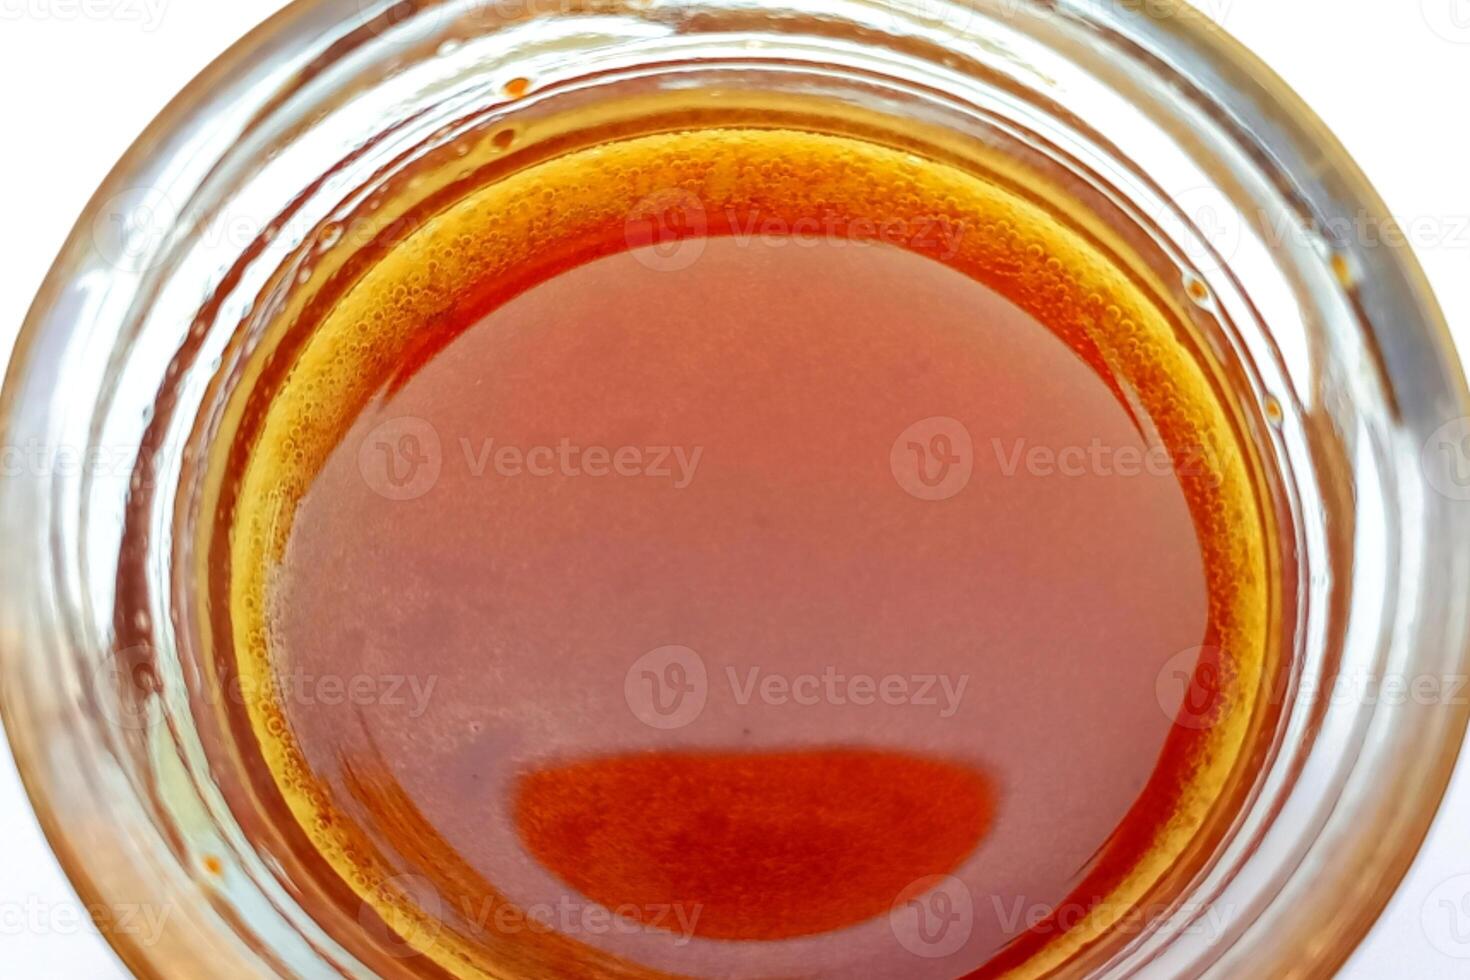 honung glas burk isolerat på vit bakgrund foto